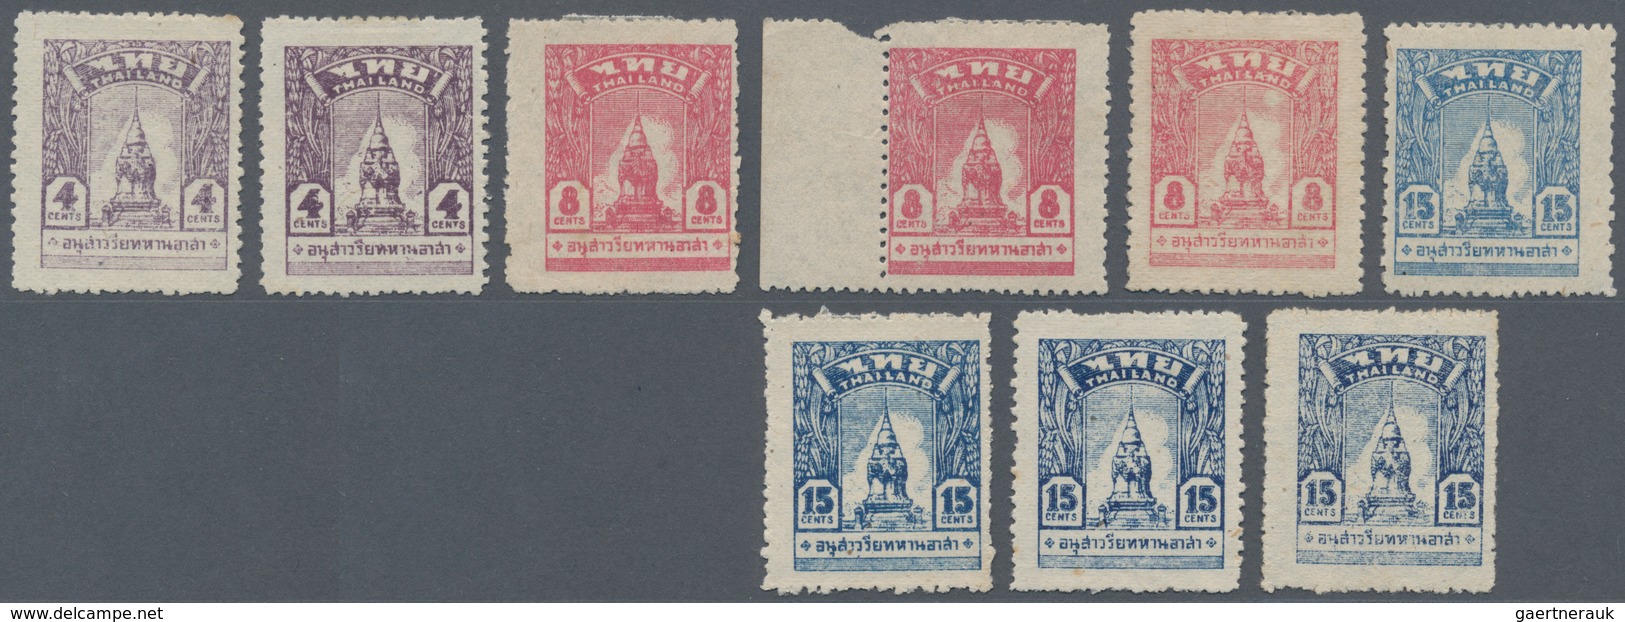 Malaiische Staaten - Kelantan: Thai Occupation, 1944, General Issue Ex 1 C./15 C. (34), Unused No Gu - Kelantan